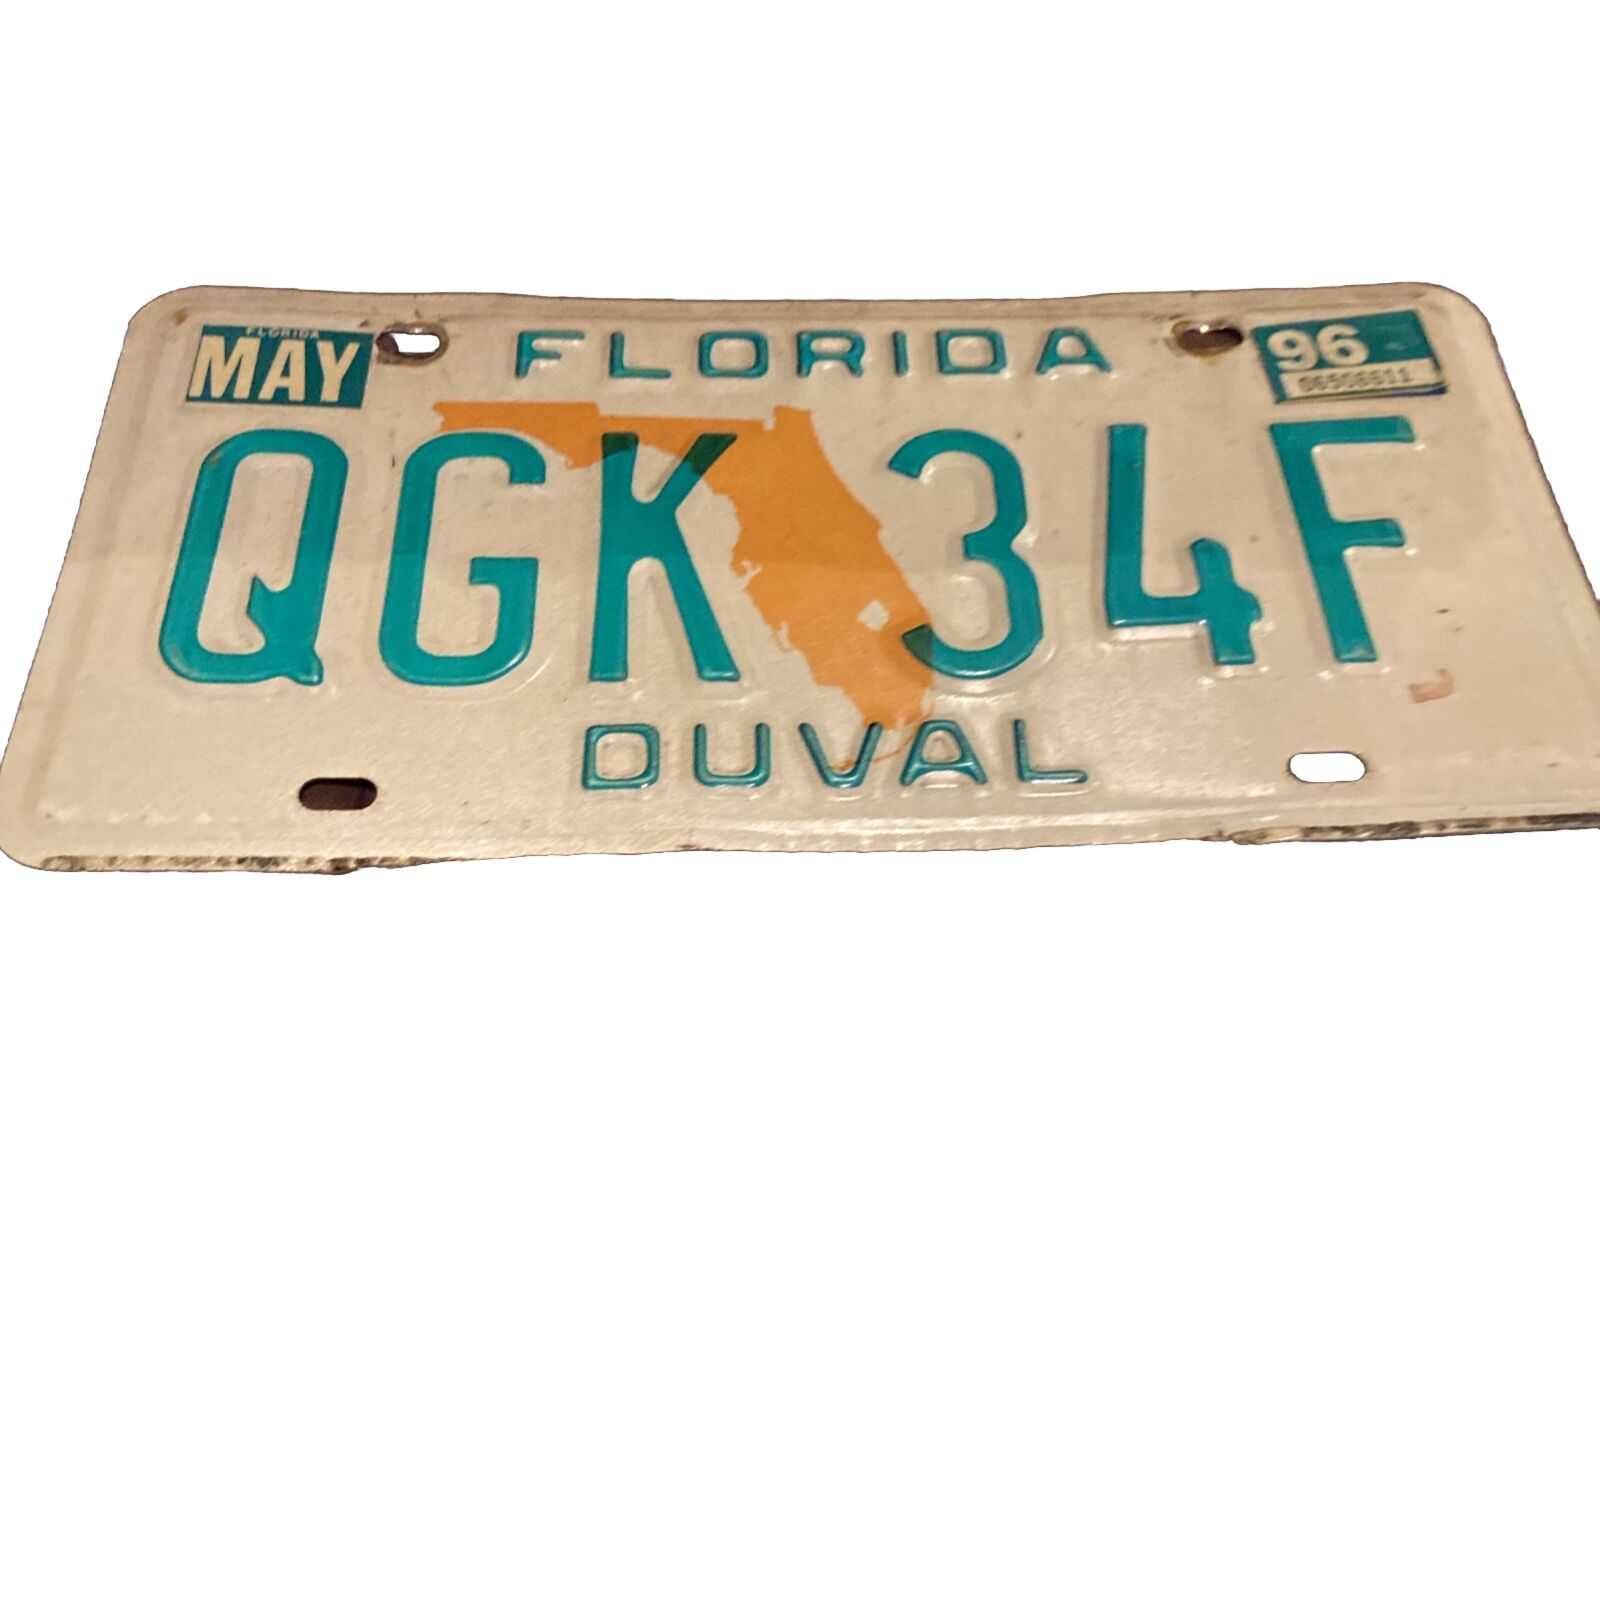 Vintage 1996 Florida License Plate Tag Sunshine State Duval County QGK-34F